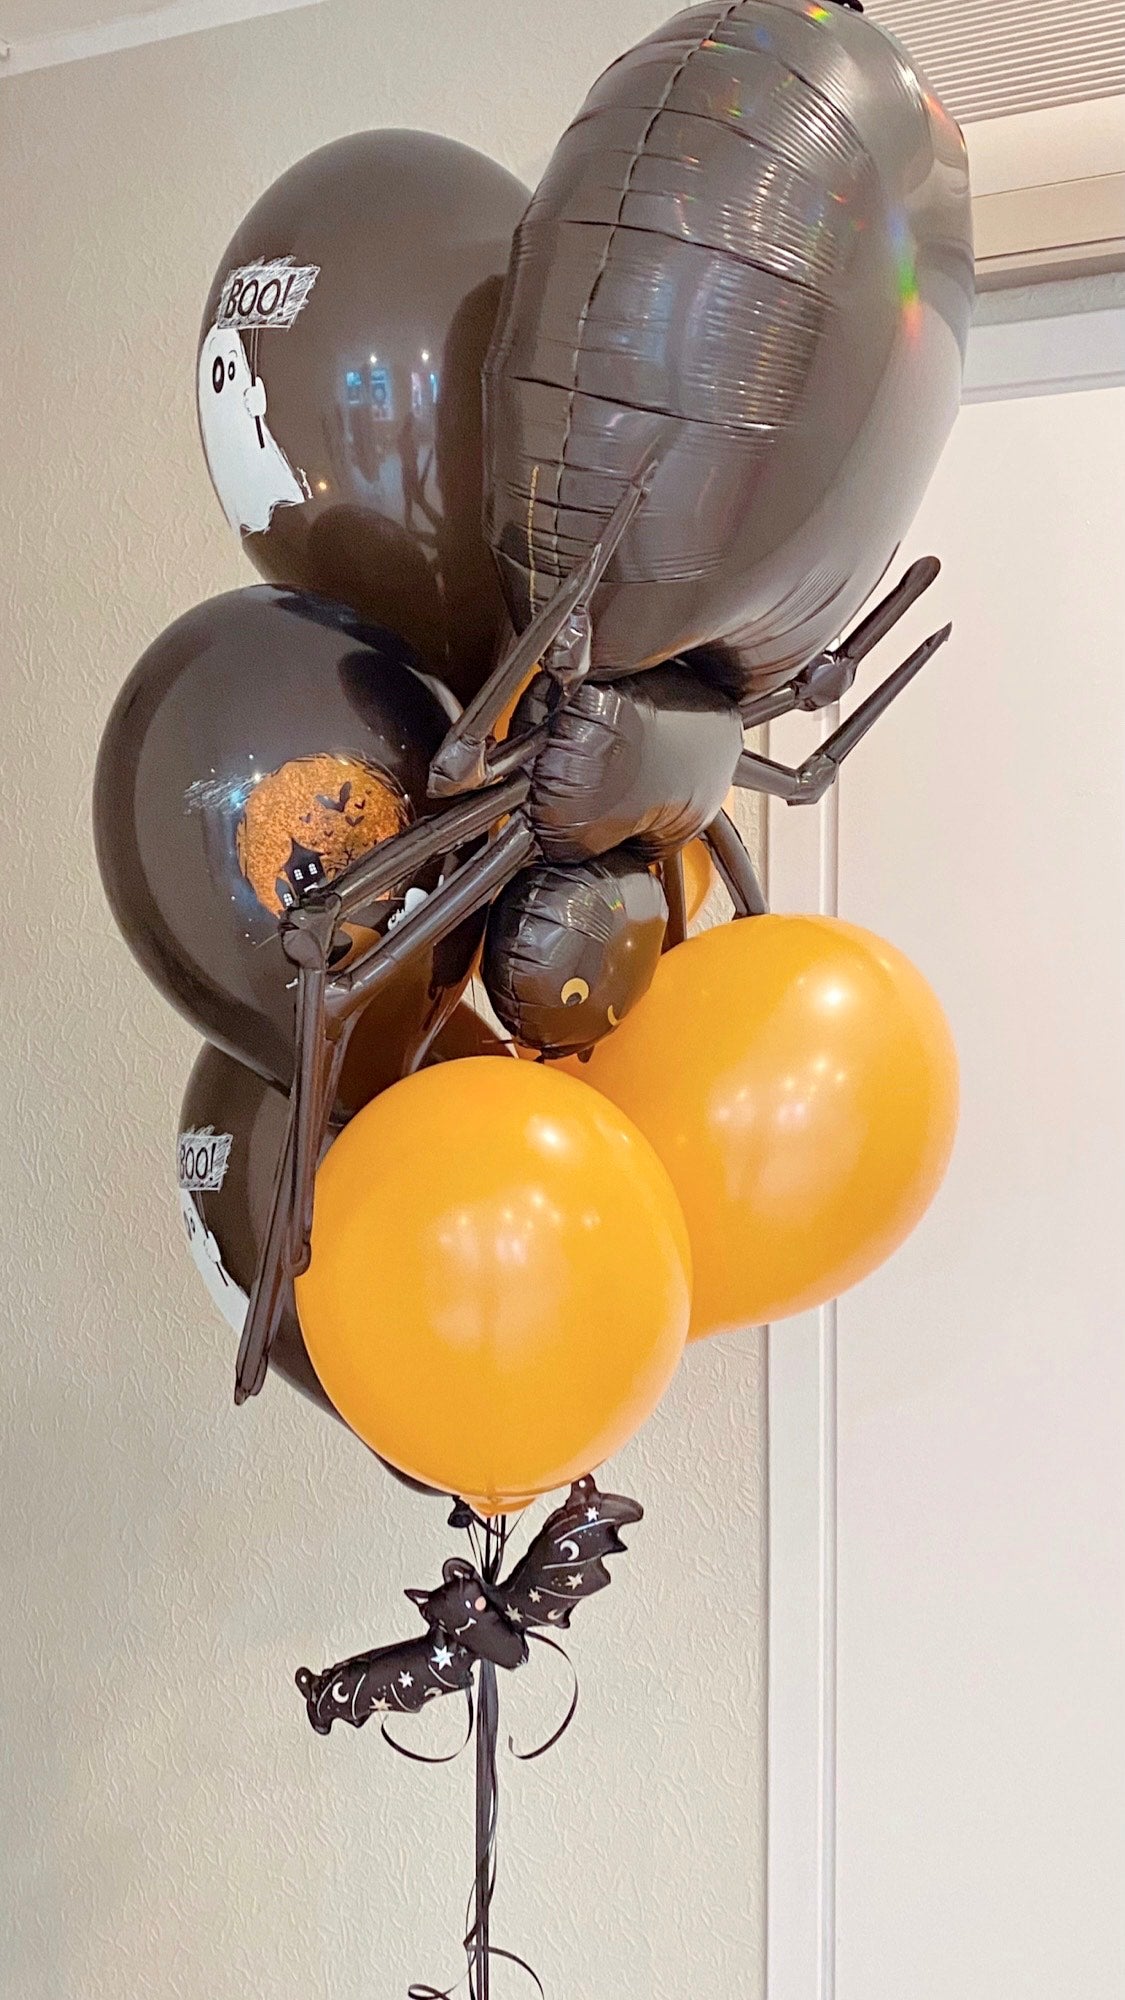 Hēlija balonu kompozīcija "Helloween "Boo!"